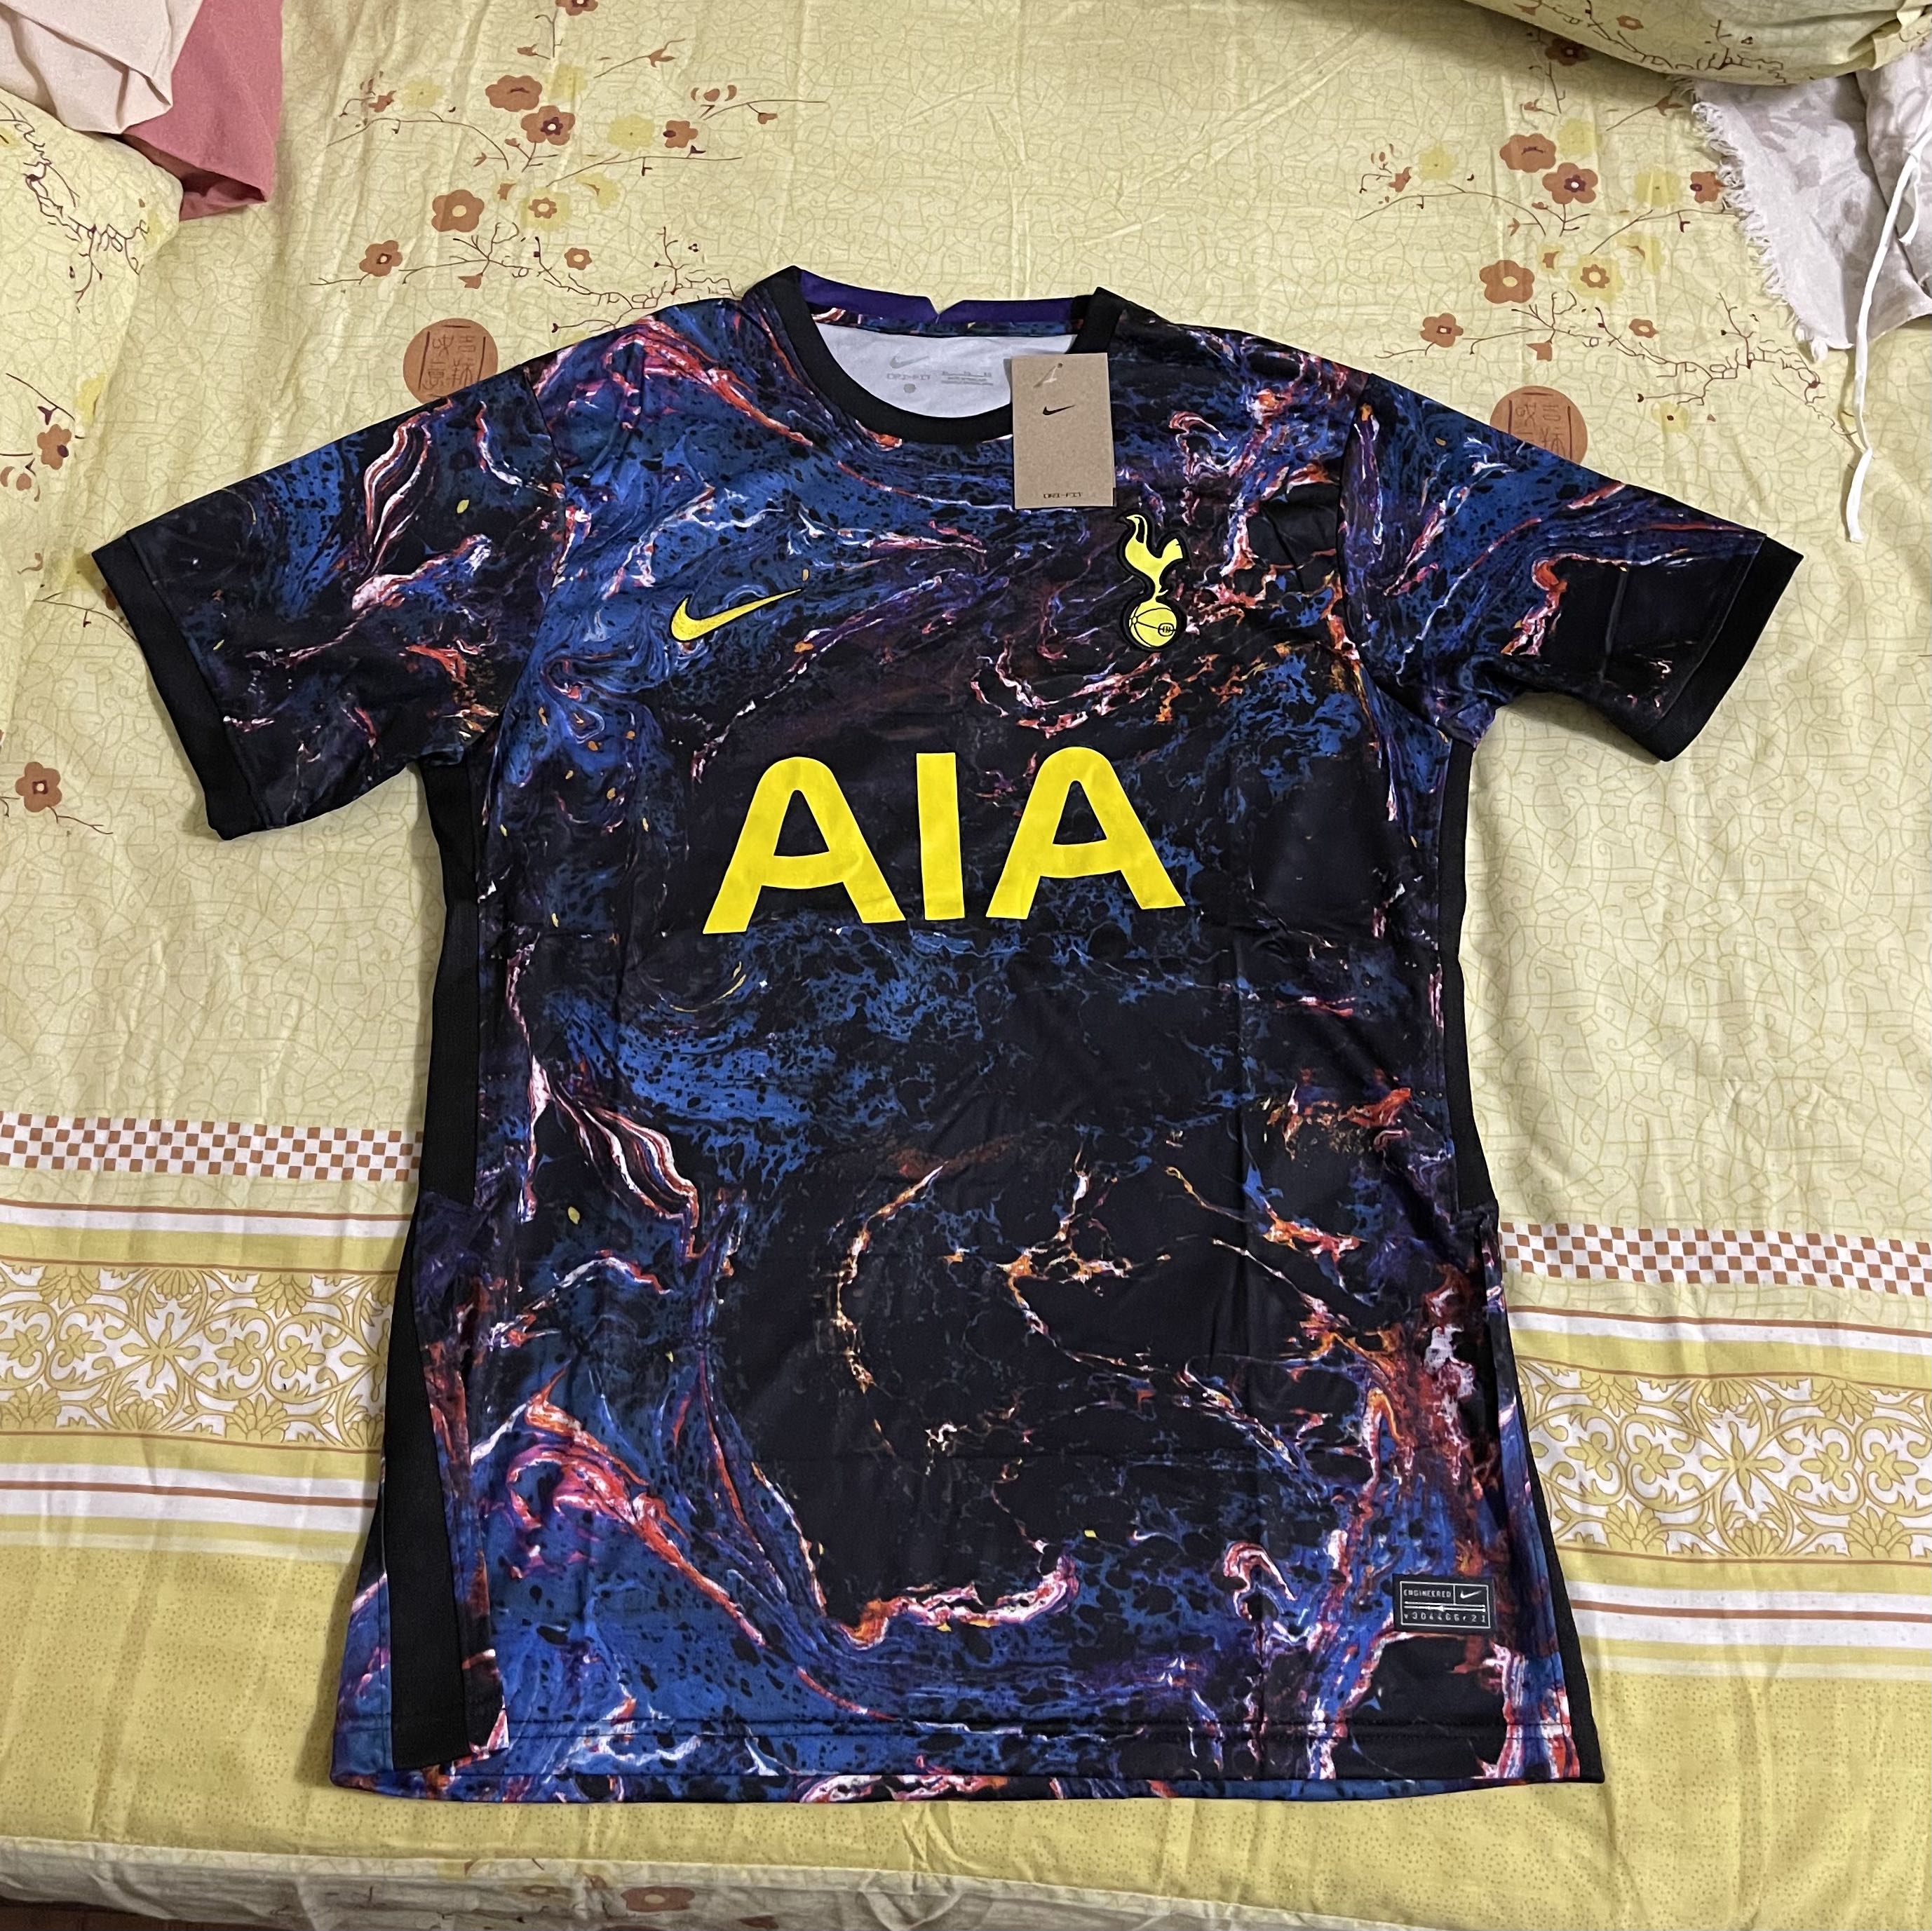 2021-22 Tottenham Hotspur Away Shirt SON#7 Official Football Name Number Set